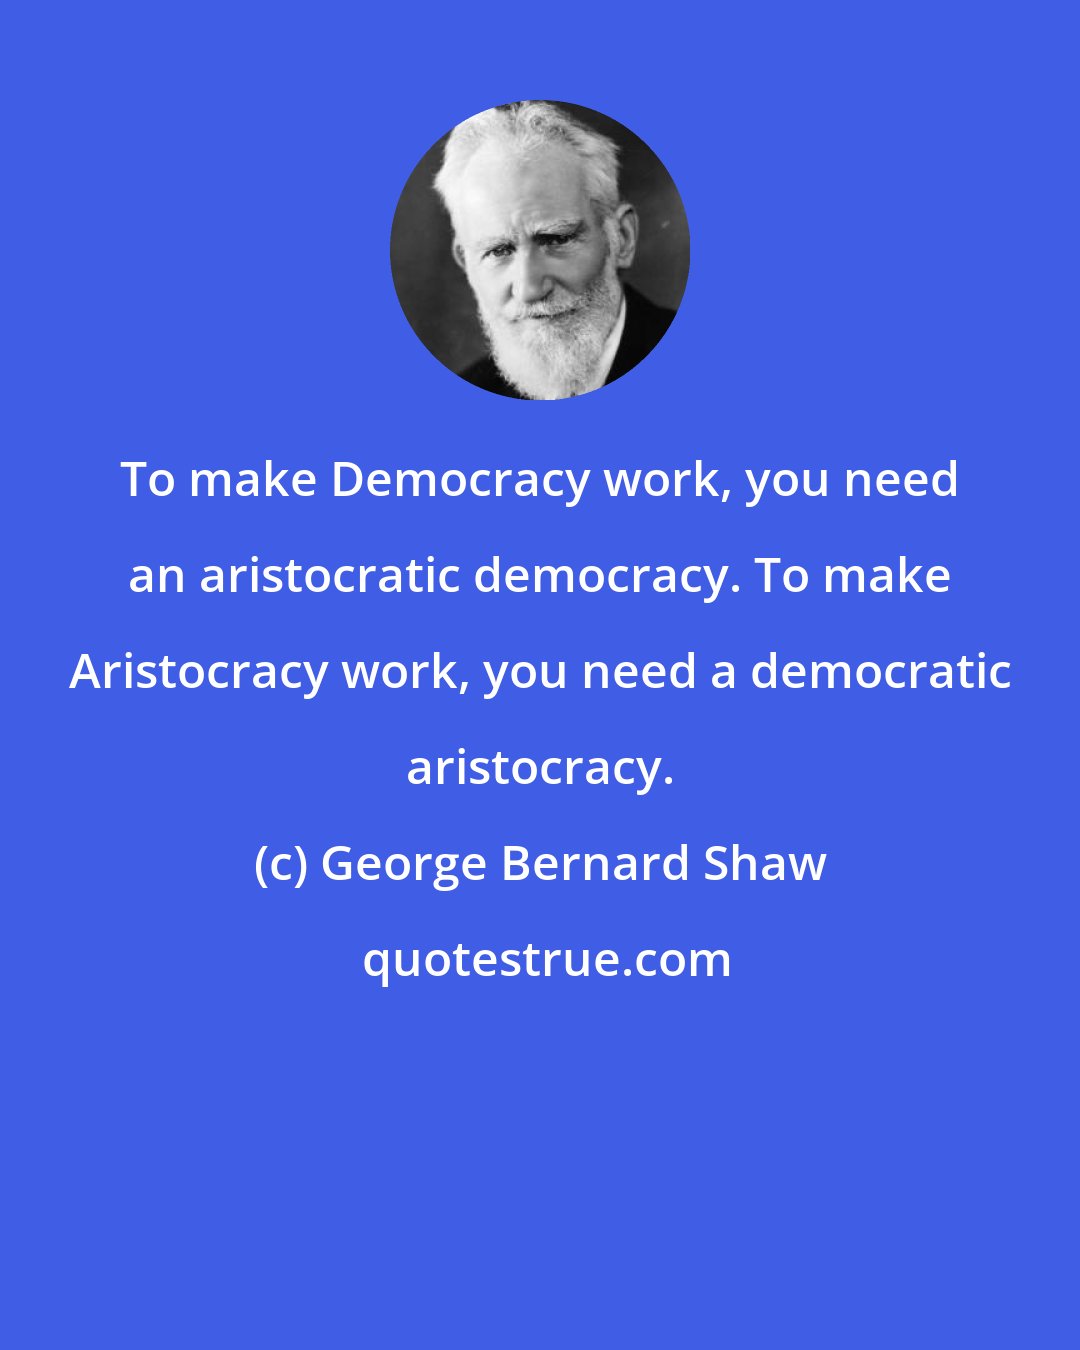 George Bernard Shaw: To make Democracy work, you need an aristocratic democracy. To make Aristocracy work, you need a democratic aristocracy.